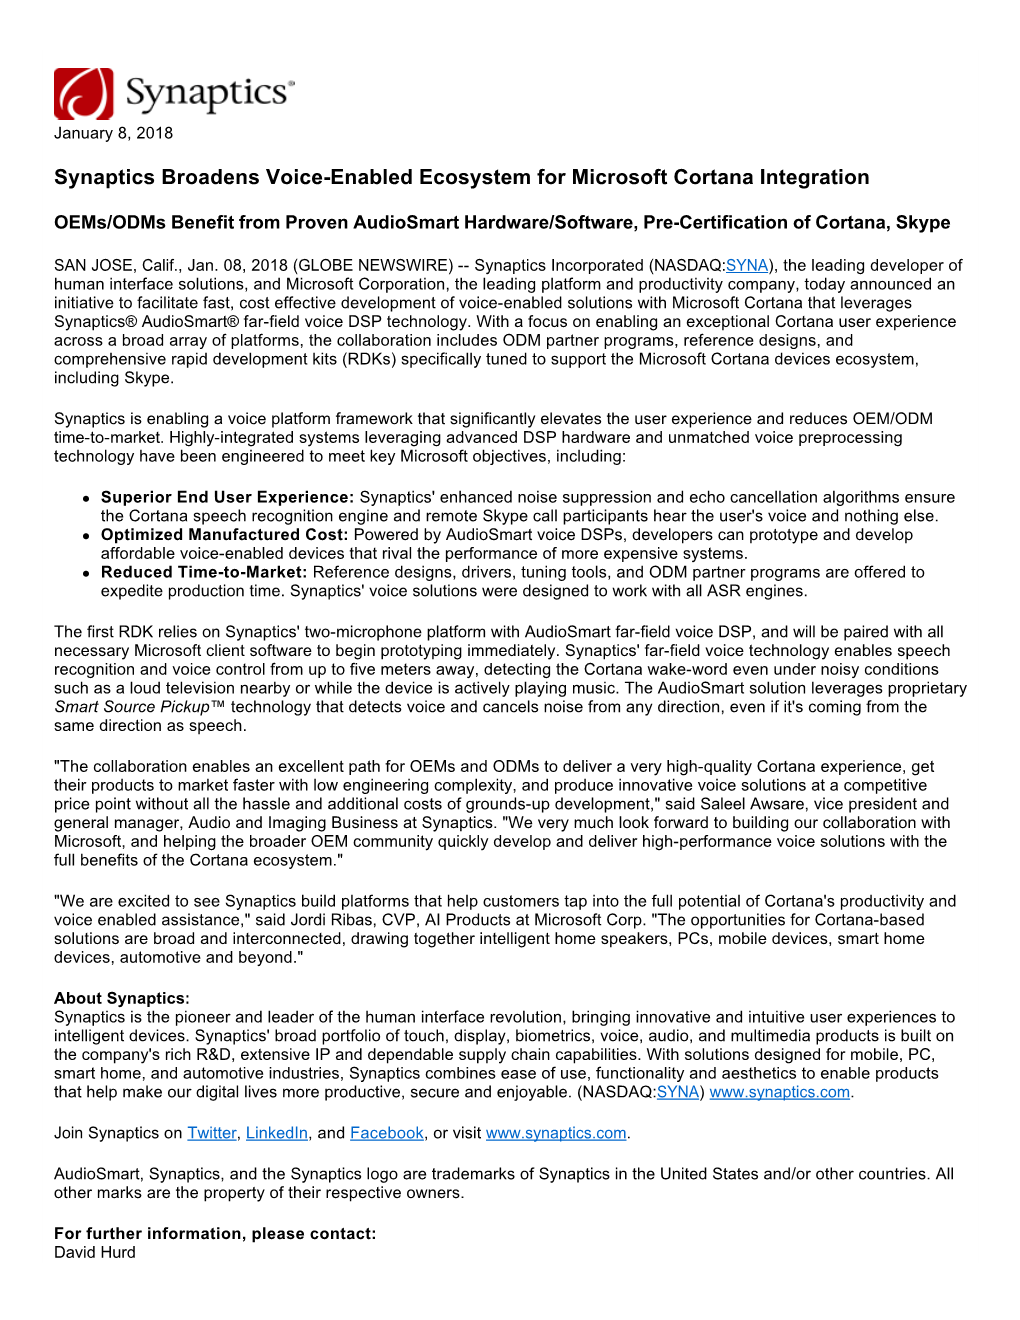 Synaptics Broadens Voice-Enabled Ecosystem for Microsoft Cortana Integration